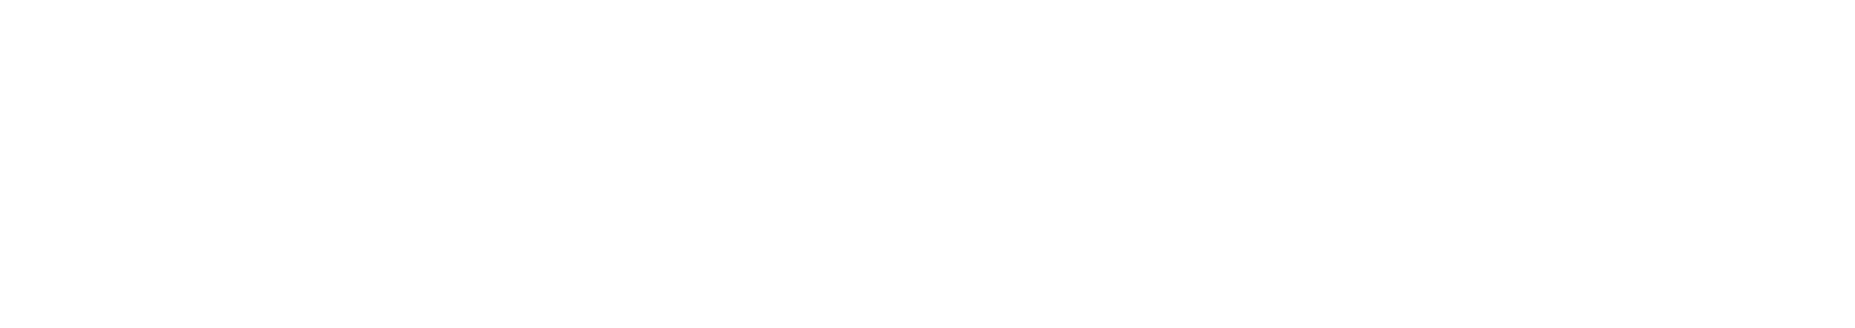 Hacı Bayram Mah  Kazımkarabekir Cad  No: 136  Altındağ Ankara